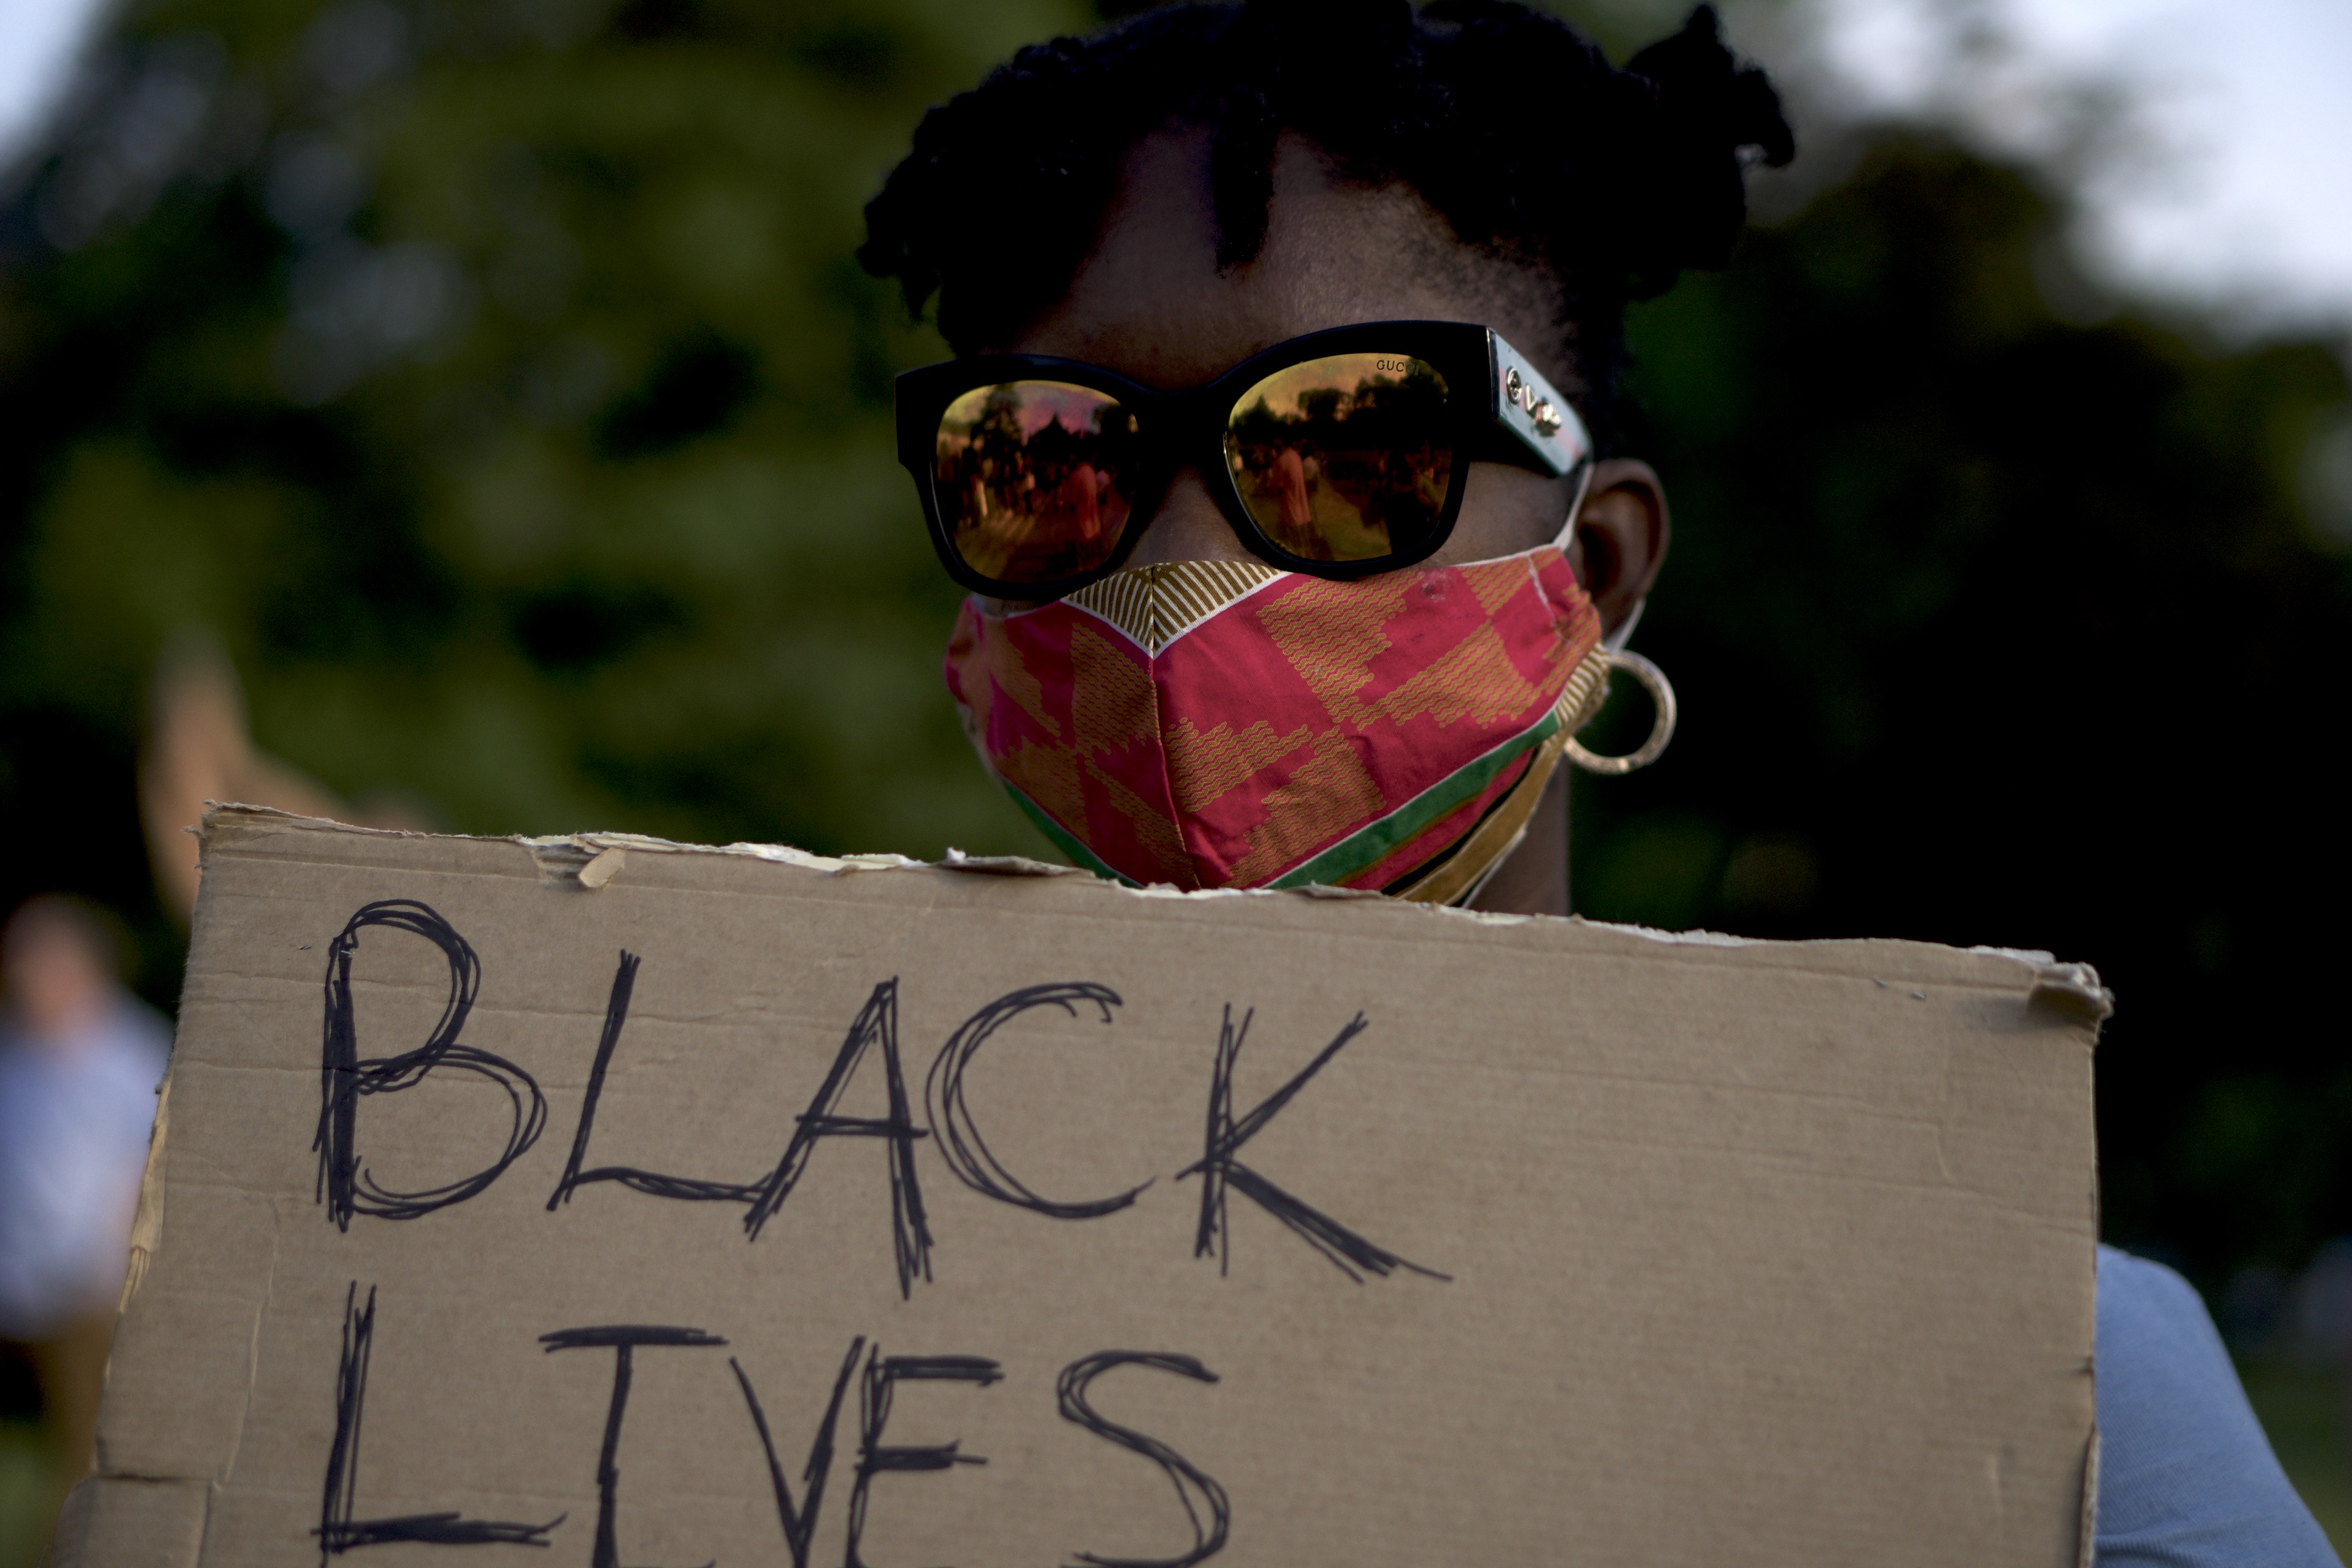 Black Lives Matter NJ